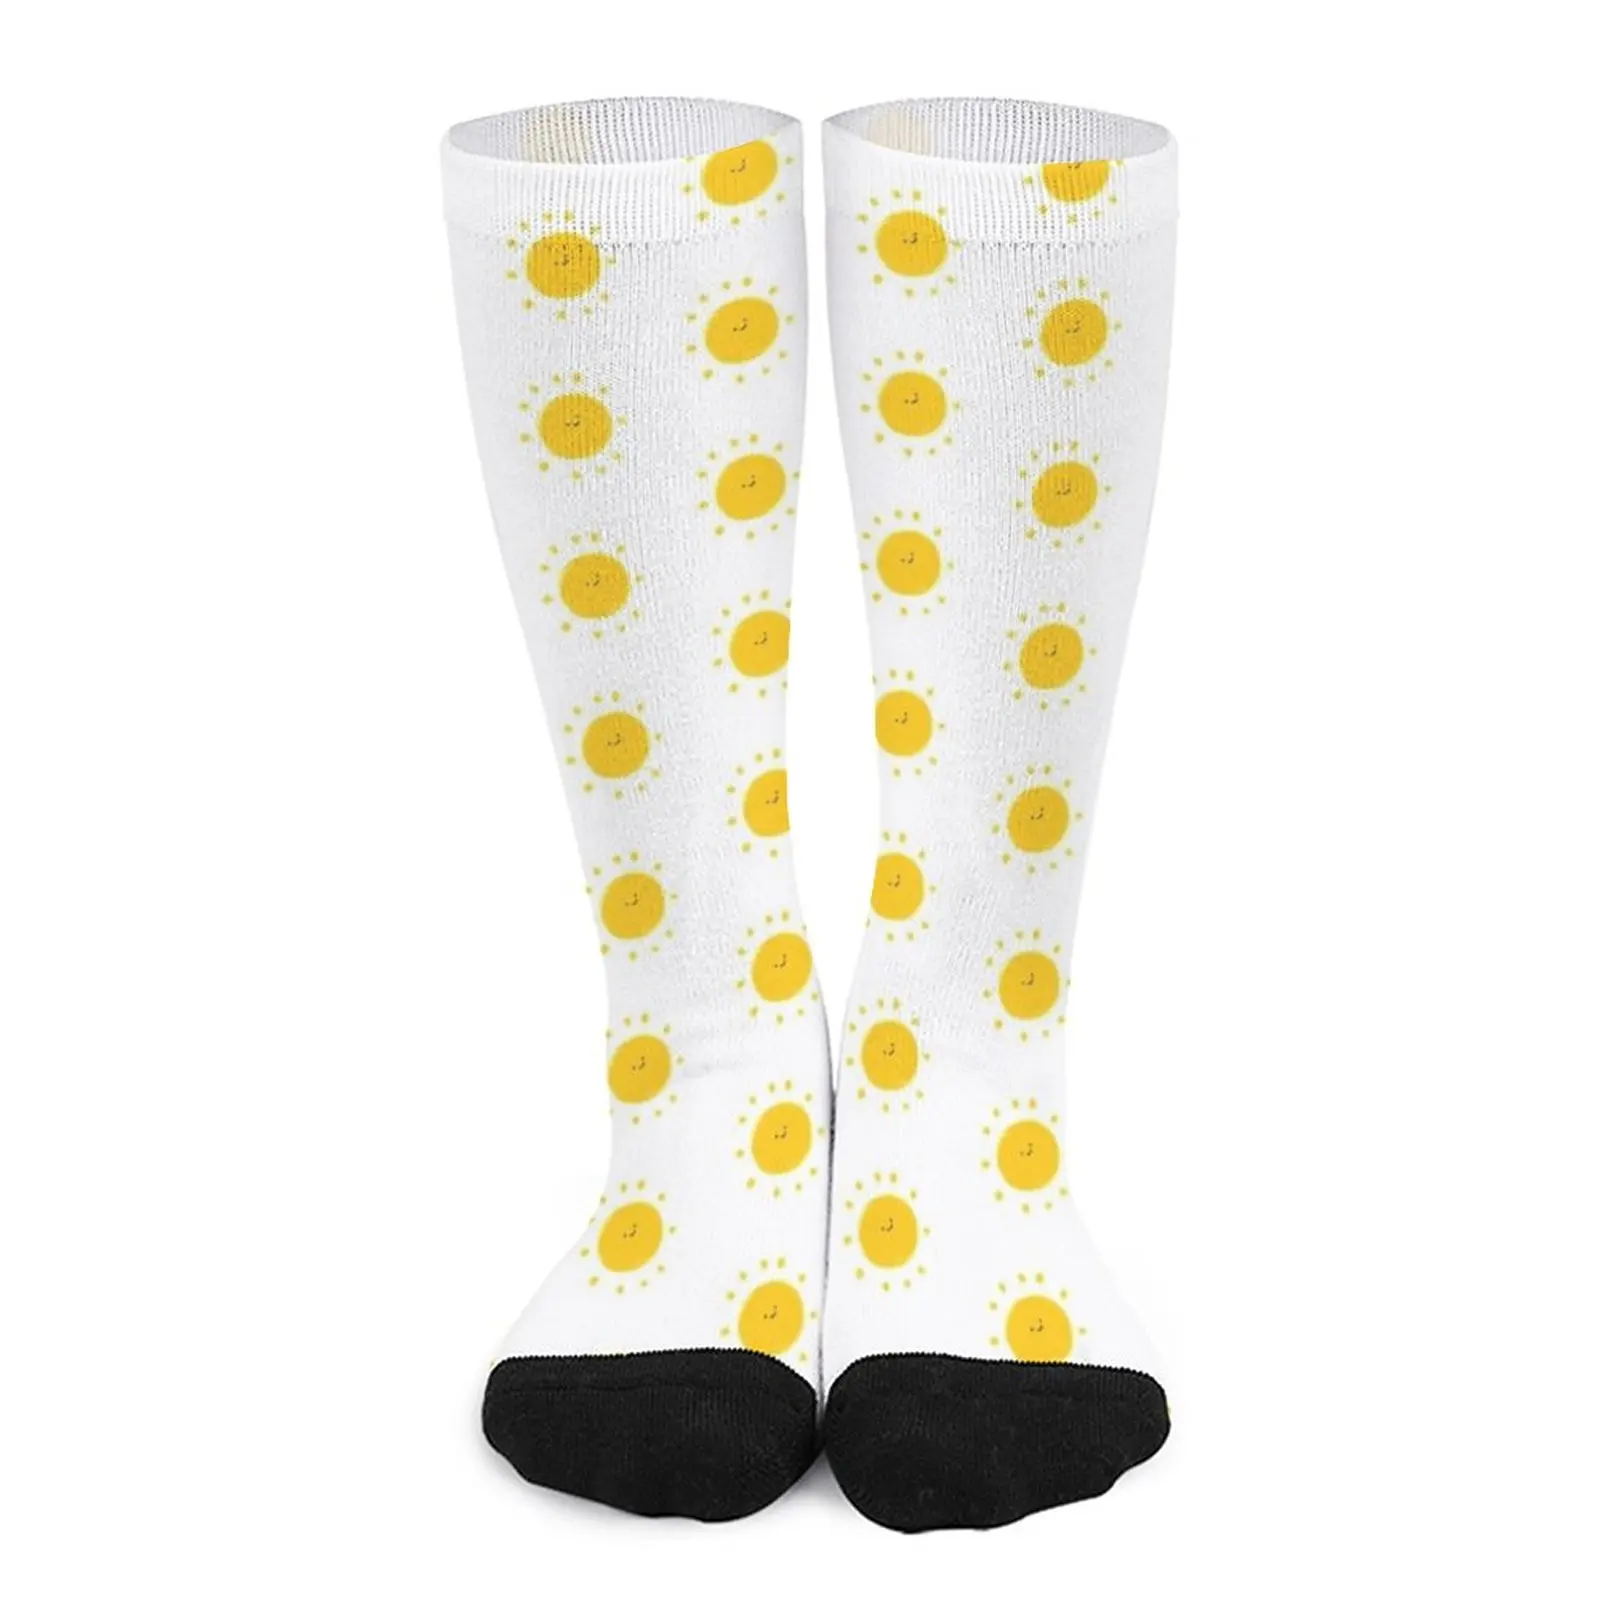 Mr. Sunshine Socks Woman socks socks aesthetic compression socks men s club 7 sunshine 1 cd